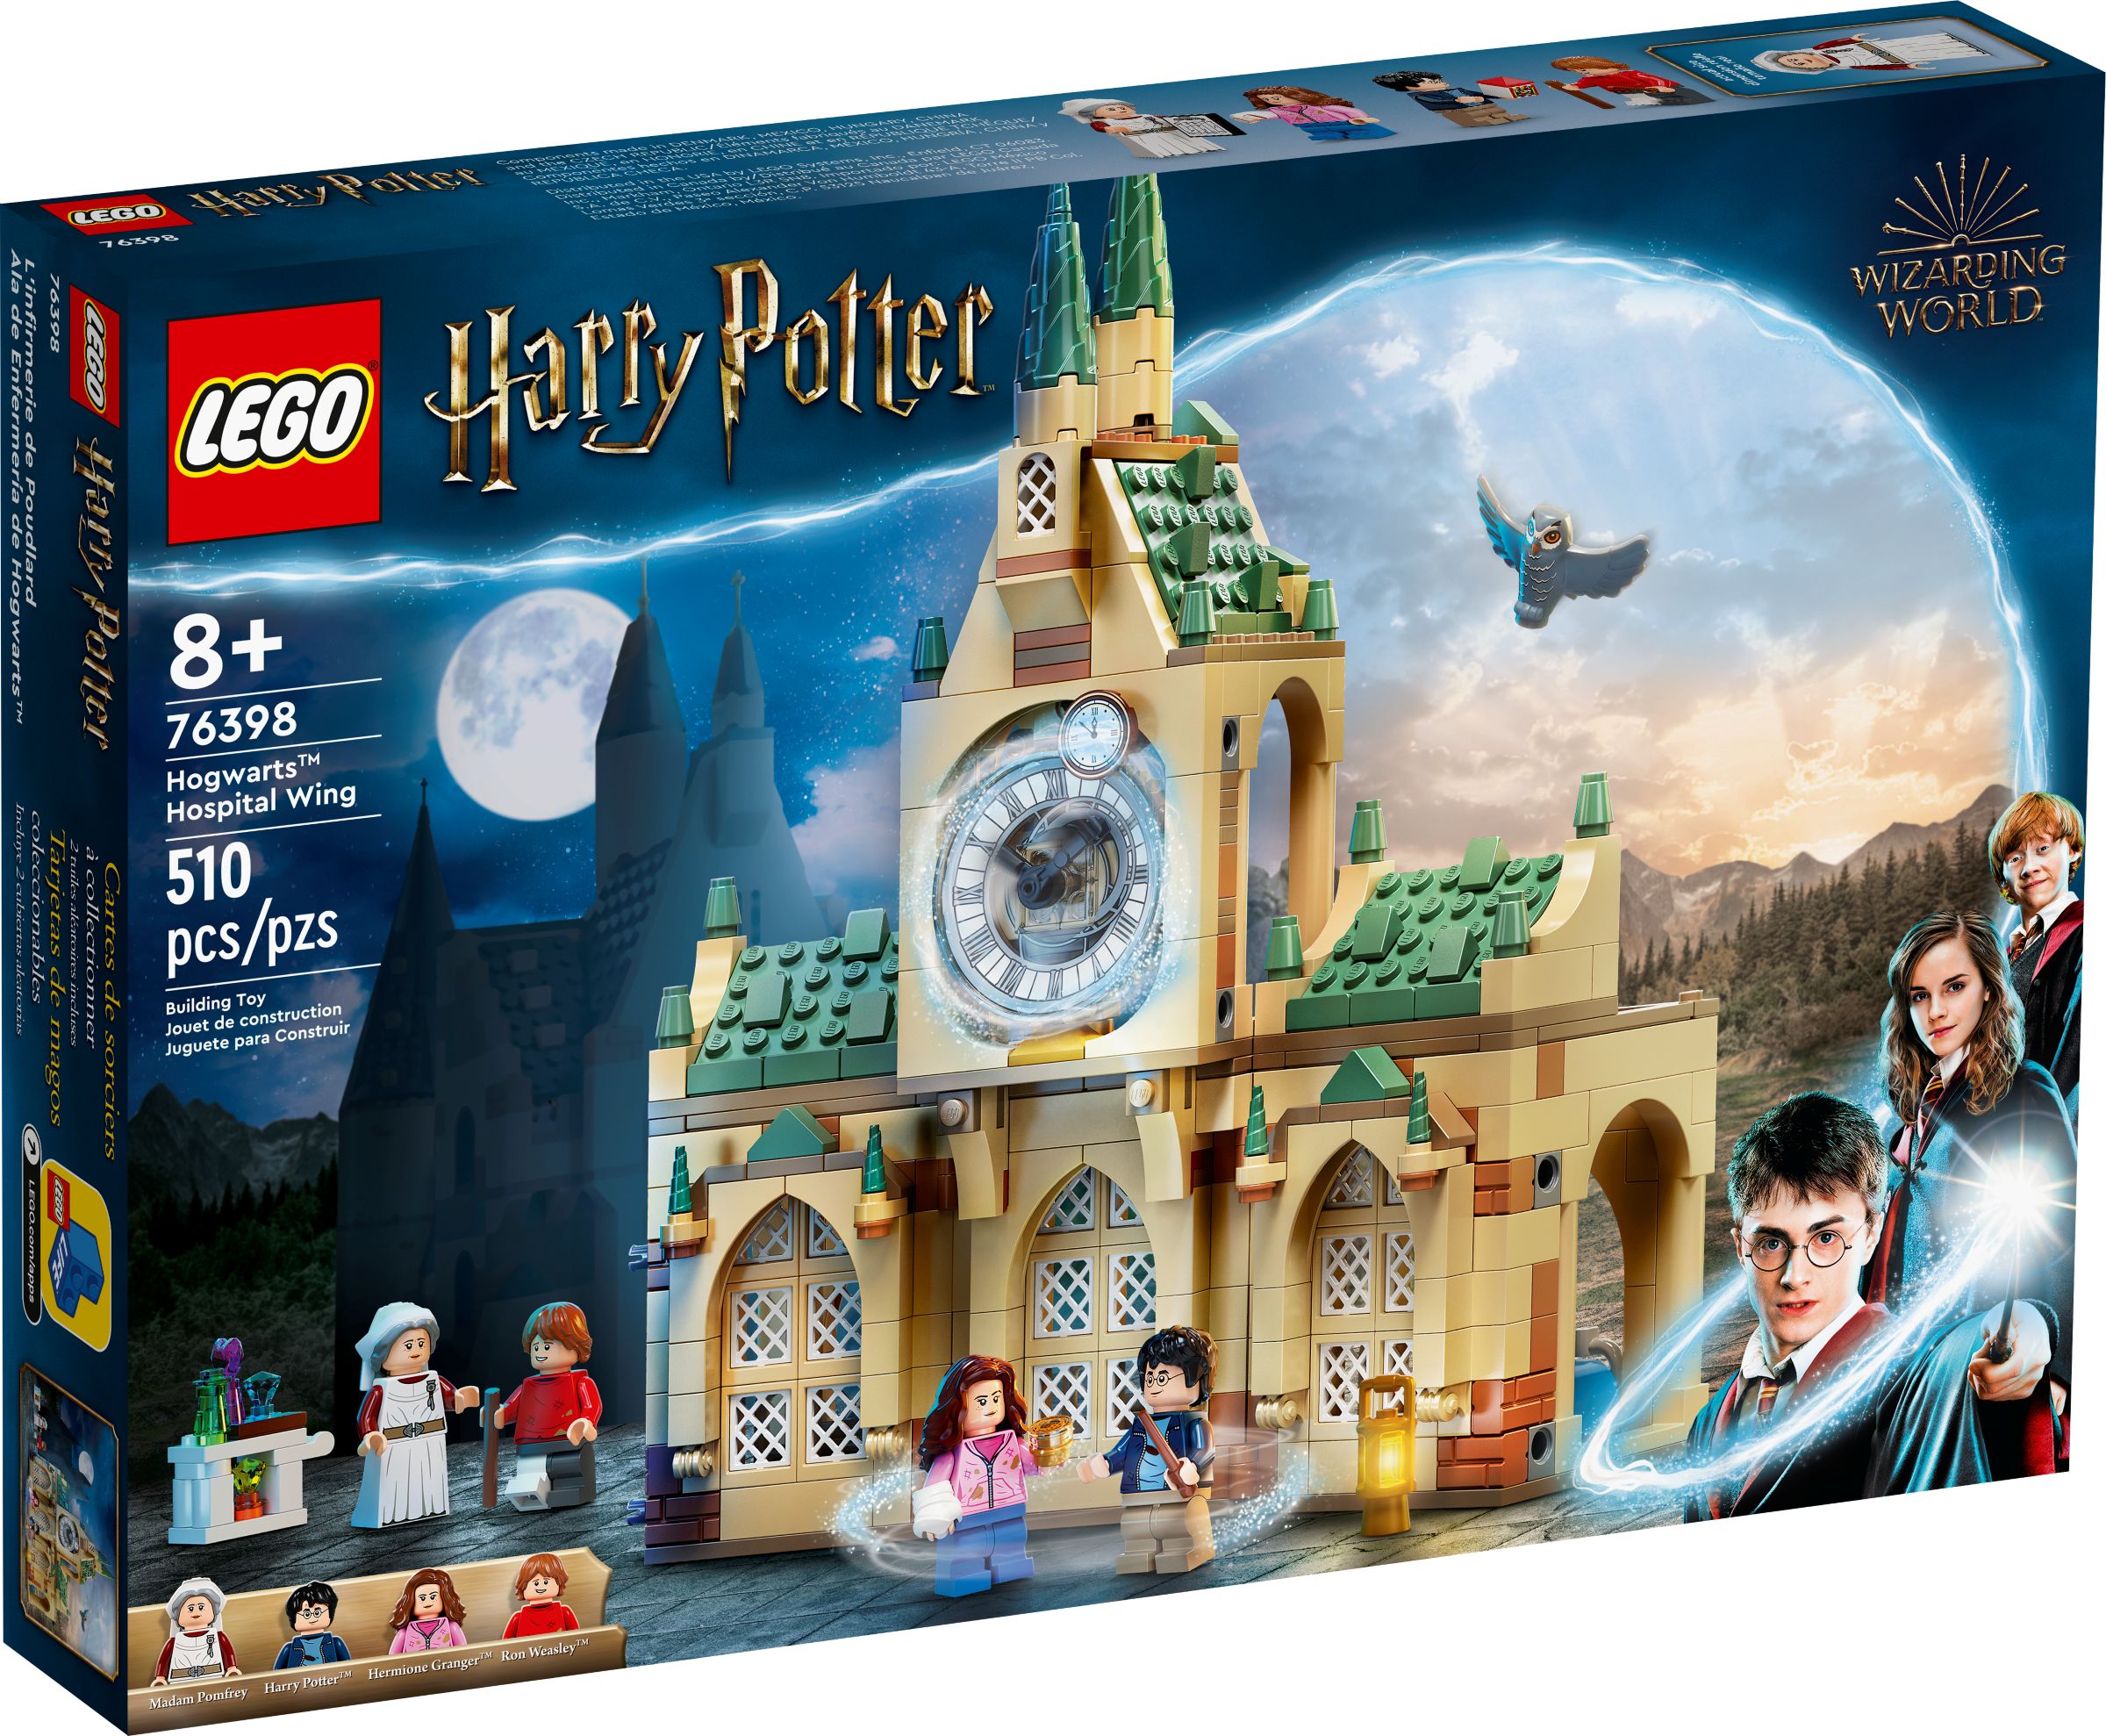 LEGO Harry Potter 76398 Hogwarts™ Krankenflügel LEGO_76398_alt1.jpg